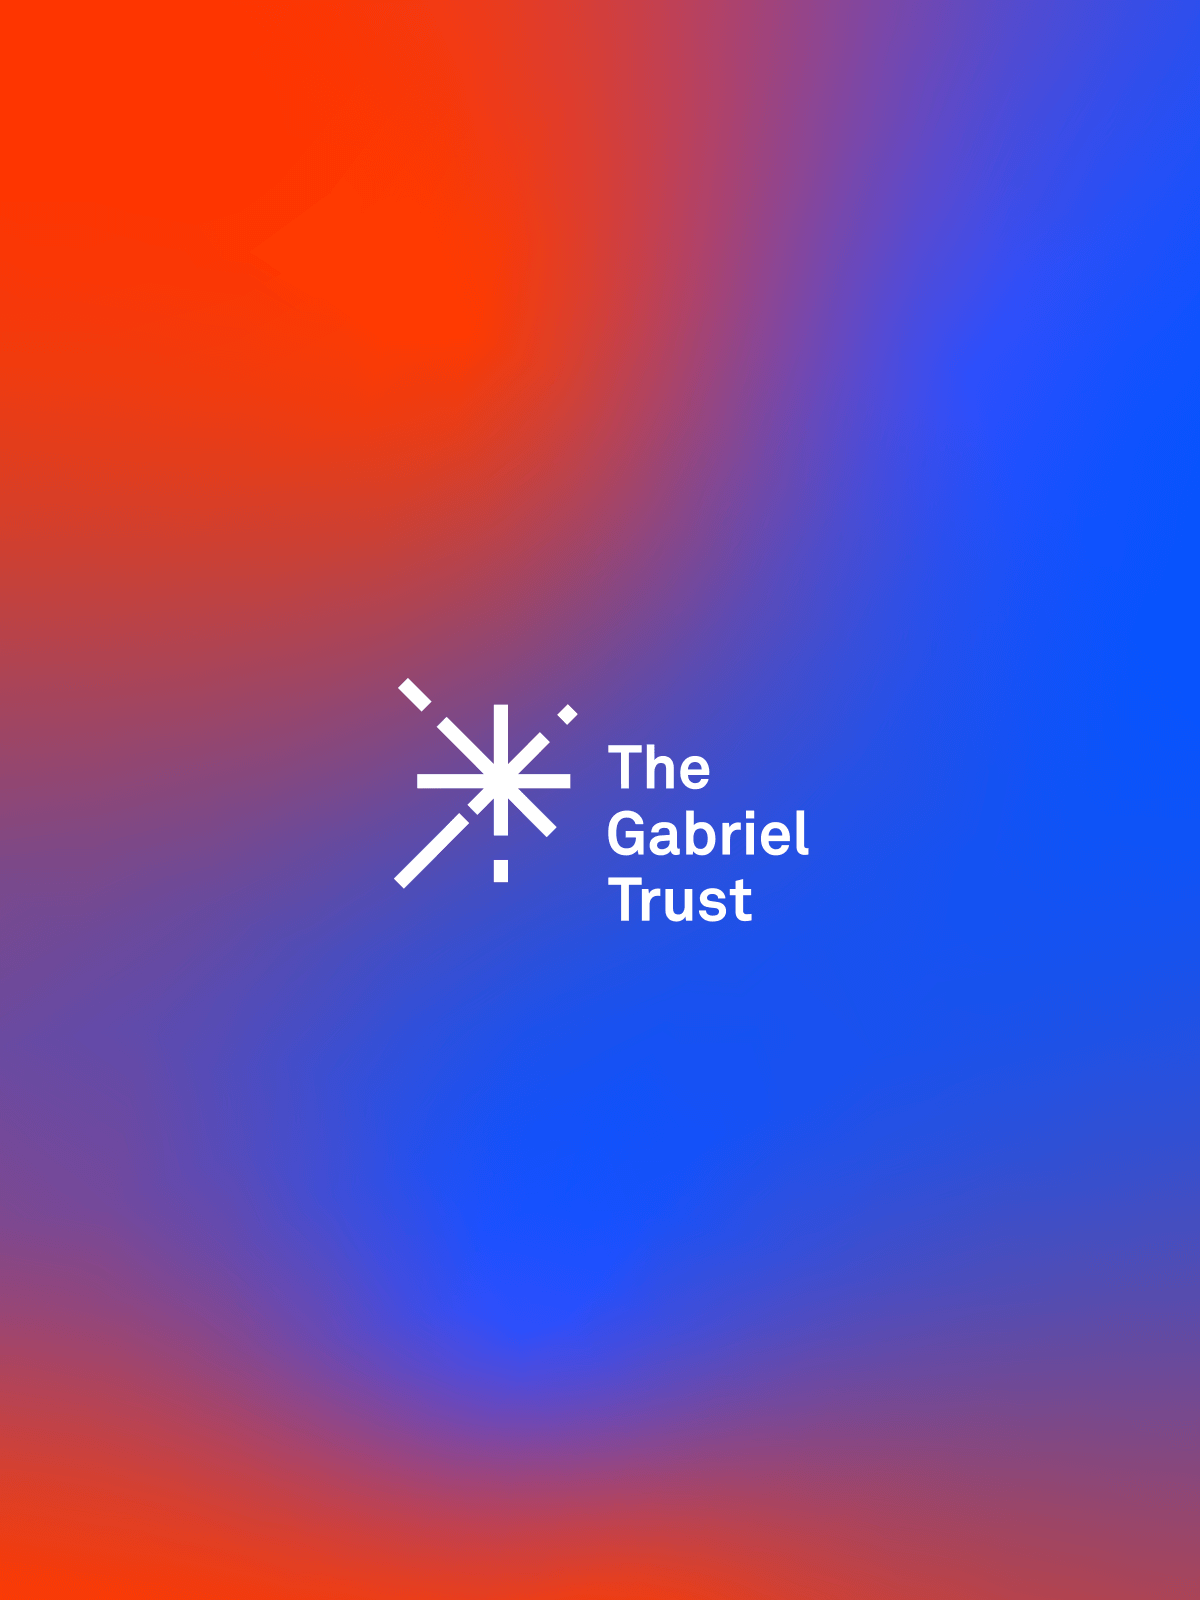 The Gabriel Trust